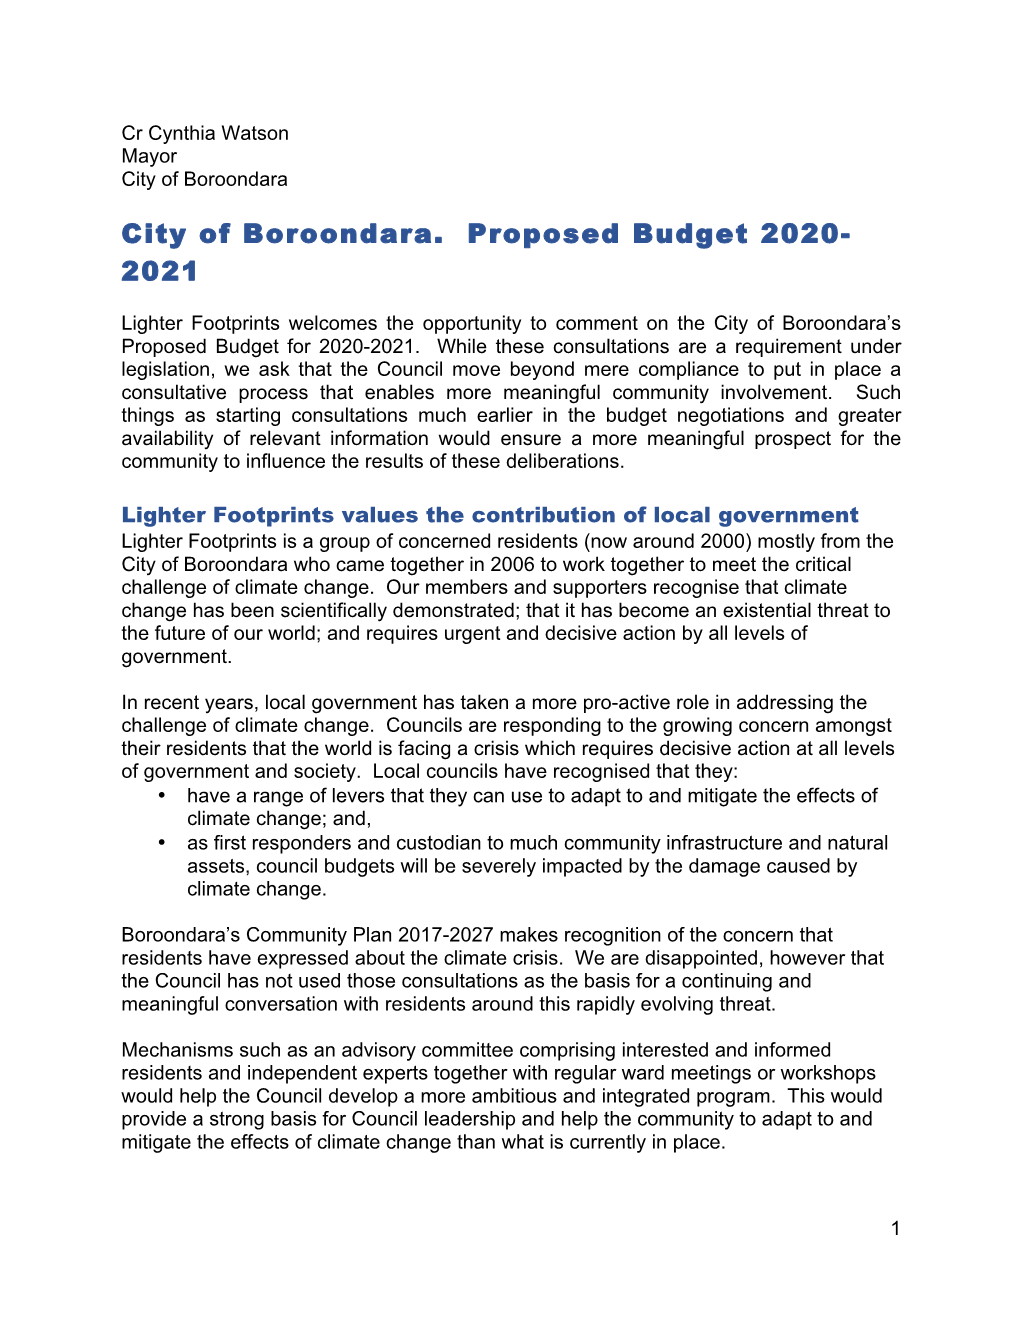 City of Boroondara. Proposed Budget 2020- 2021